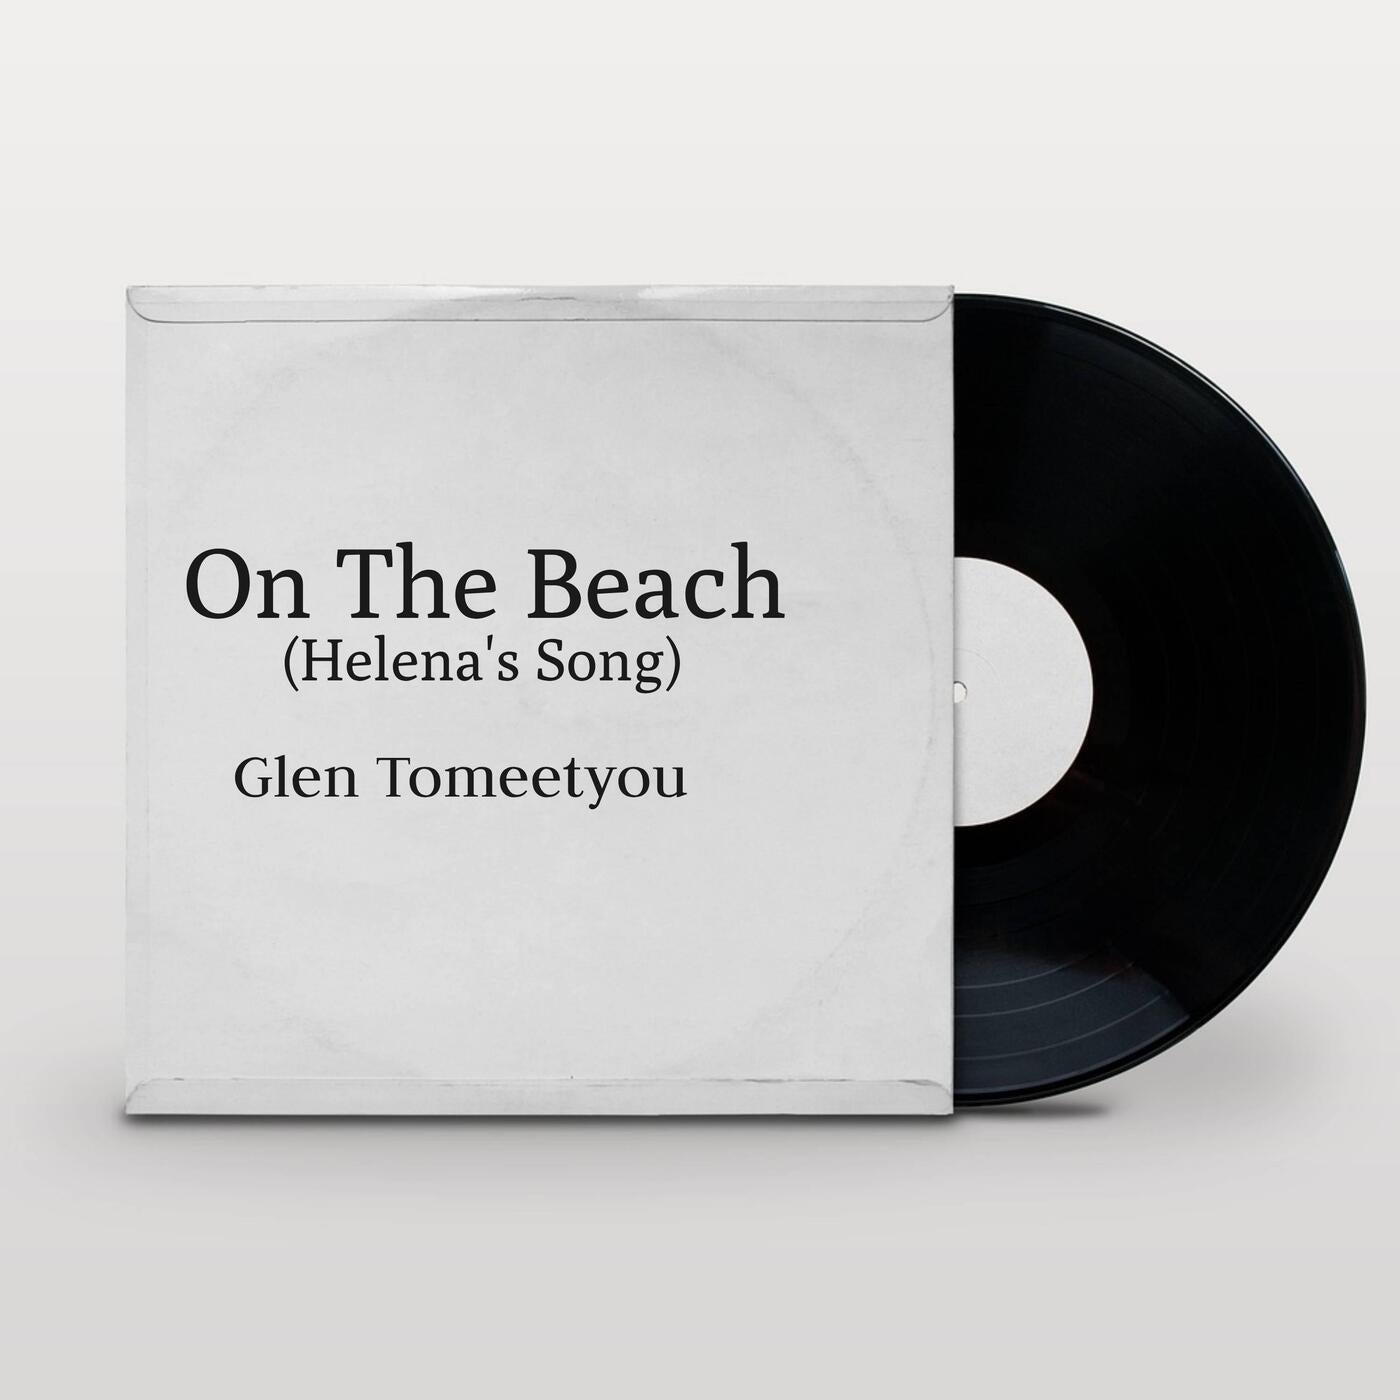 on the beach (helena's song)